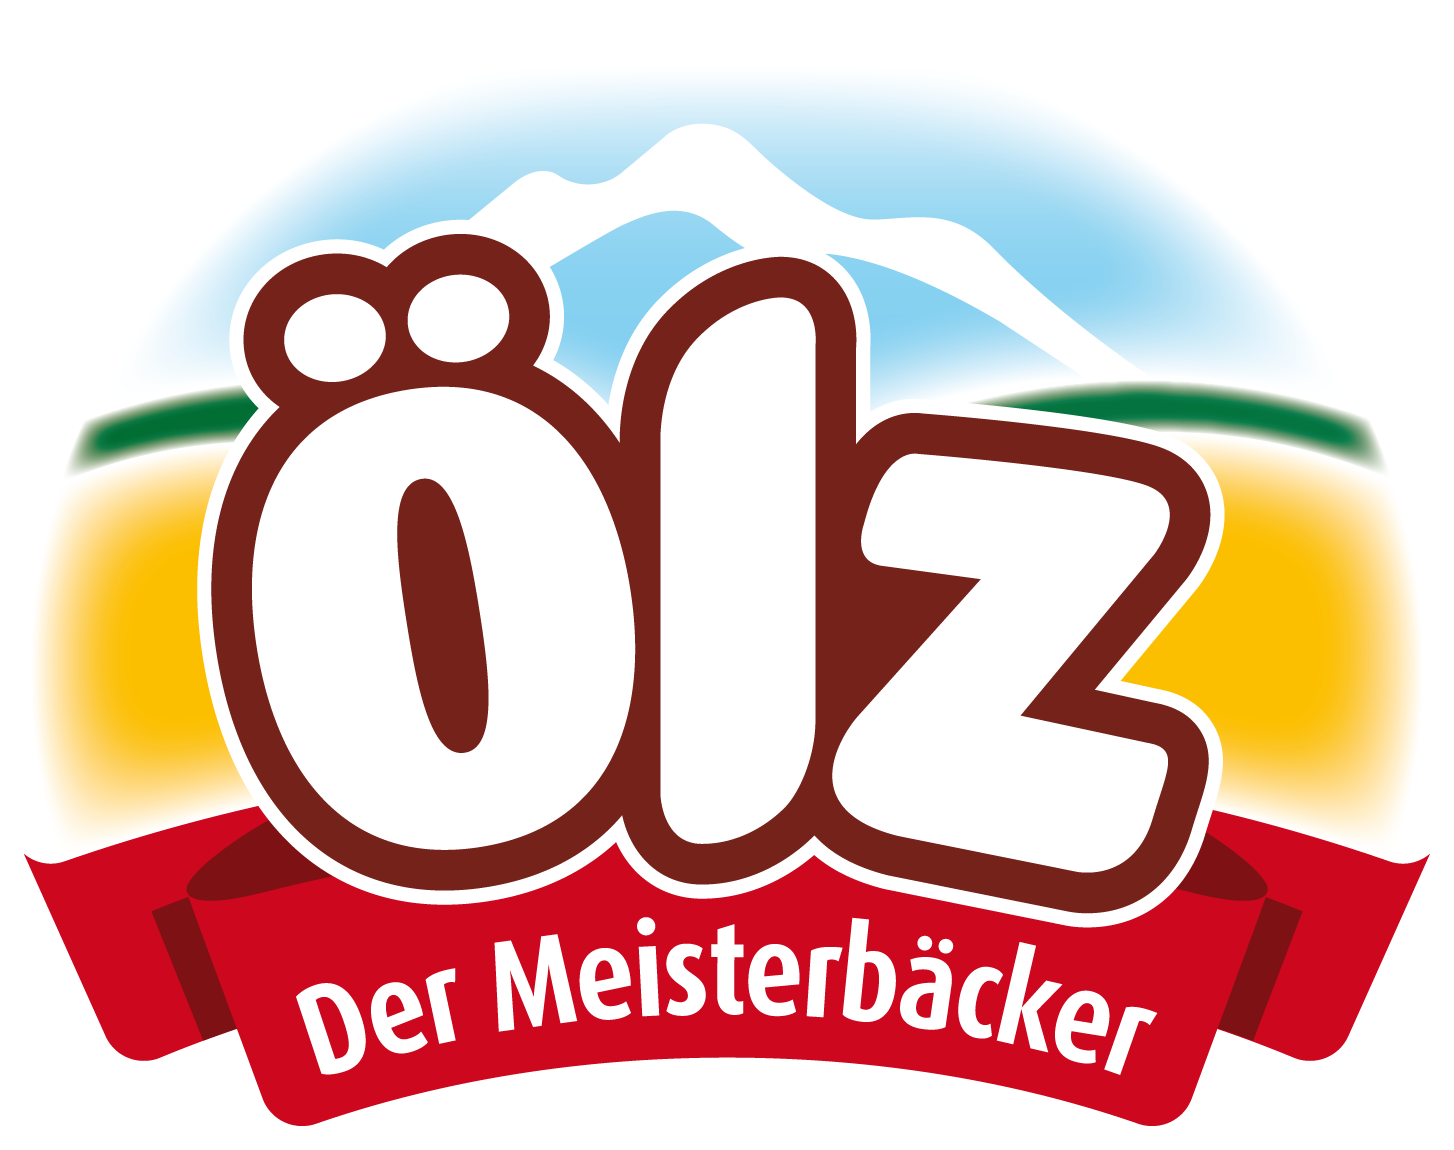 Oelz_logo_4c_2018_RGB_300dpi